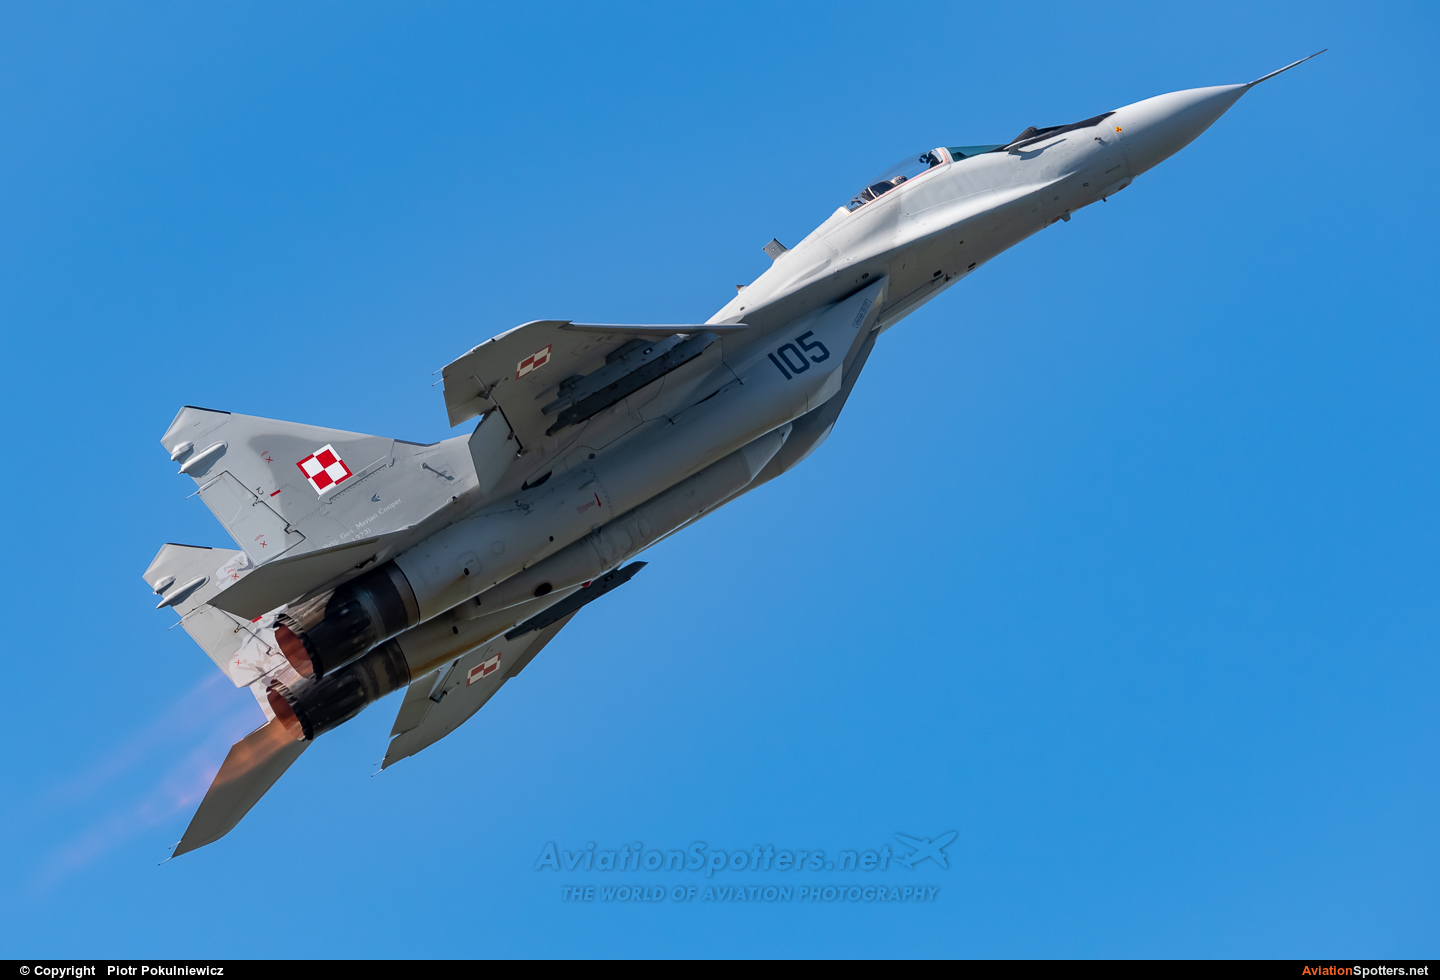 Poland - Air Force  -  MiG-29A  (105) By Piotr Pokulniewicz (Piciu)